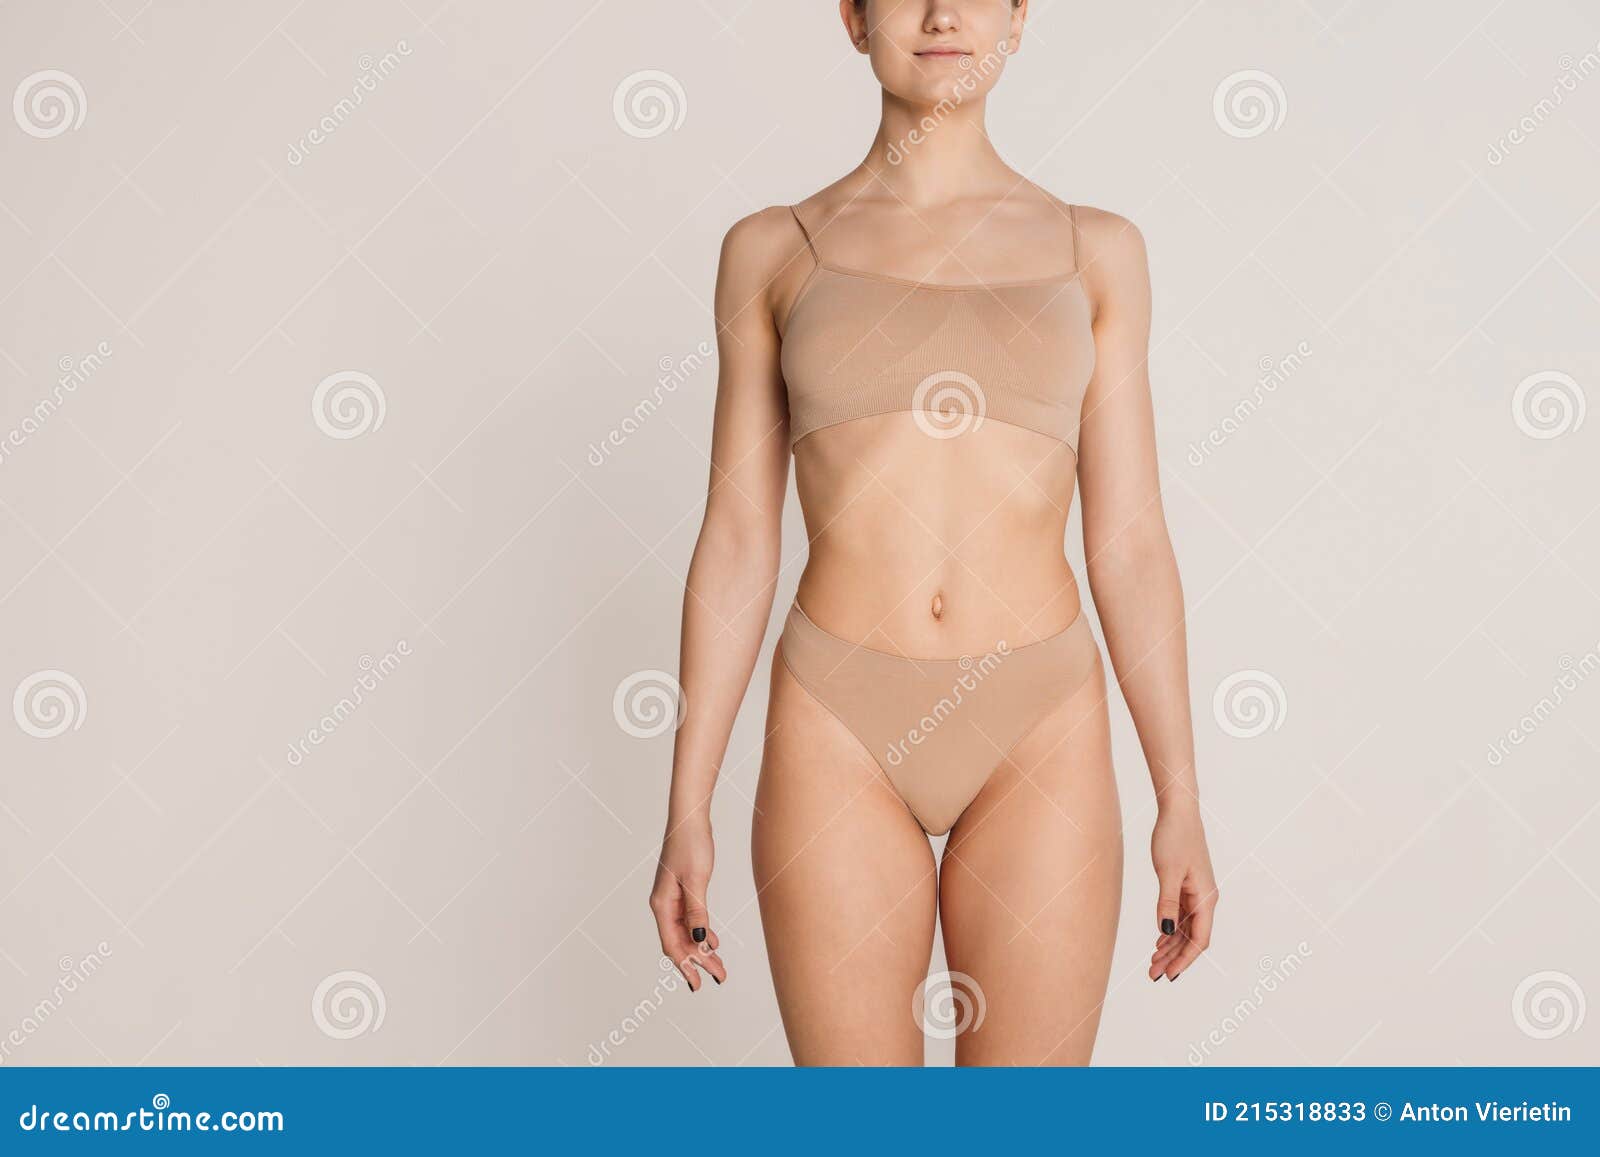 Beautiful Slim Female Body in Nude Color Underwear Over Grey